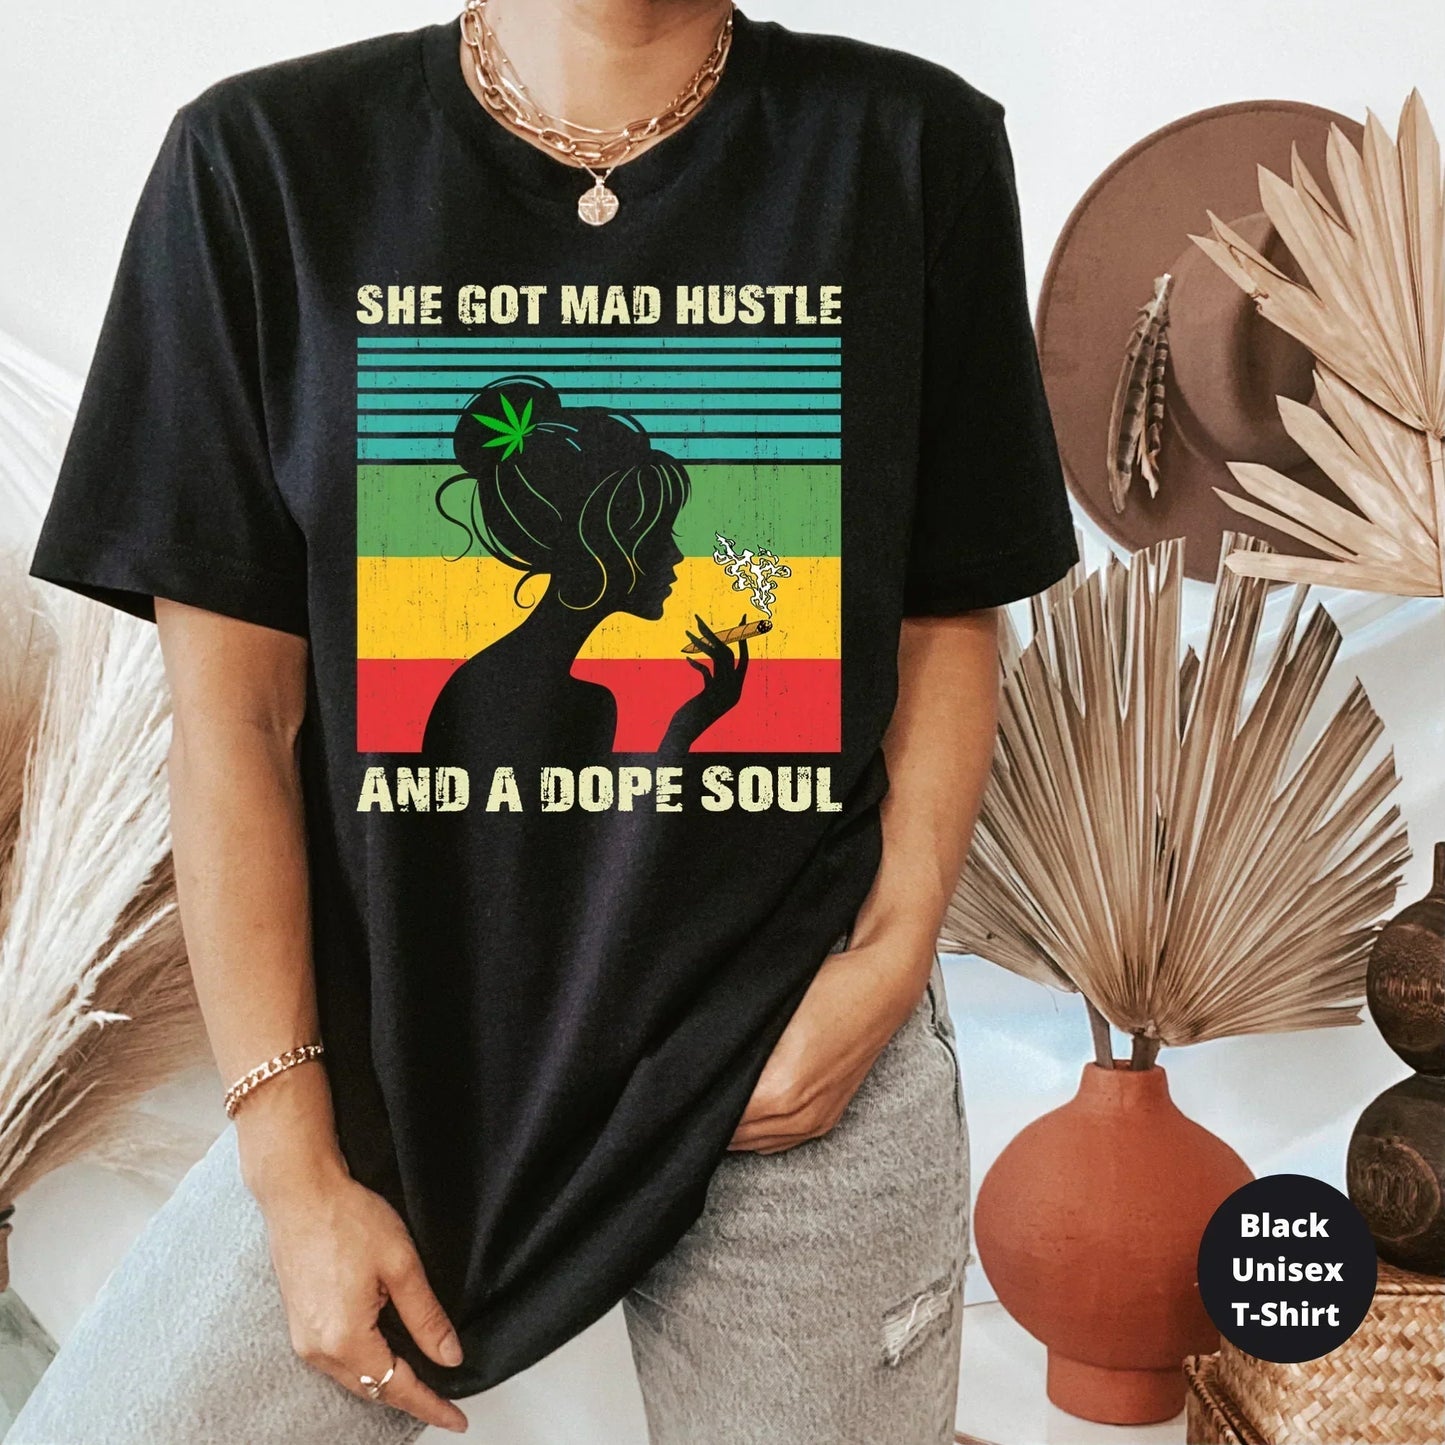 She Got Made Hustle and a Dope Soul, Stoner Shirt HMDesignStudioUS